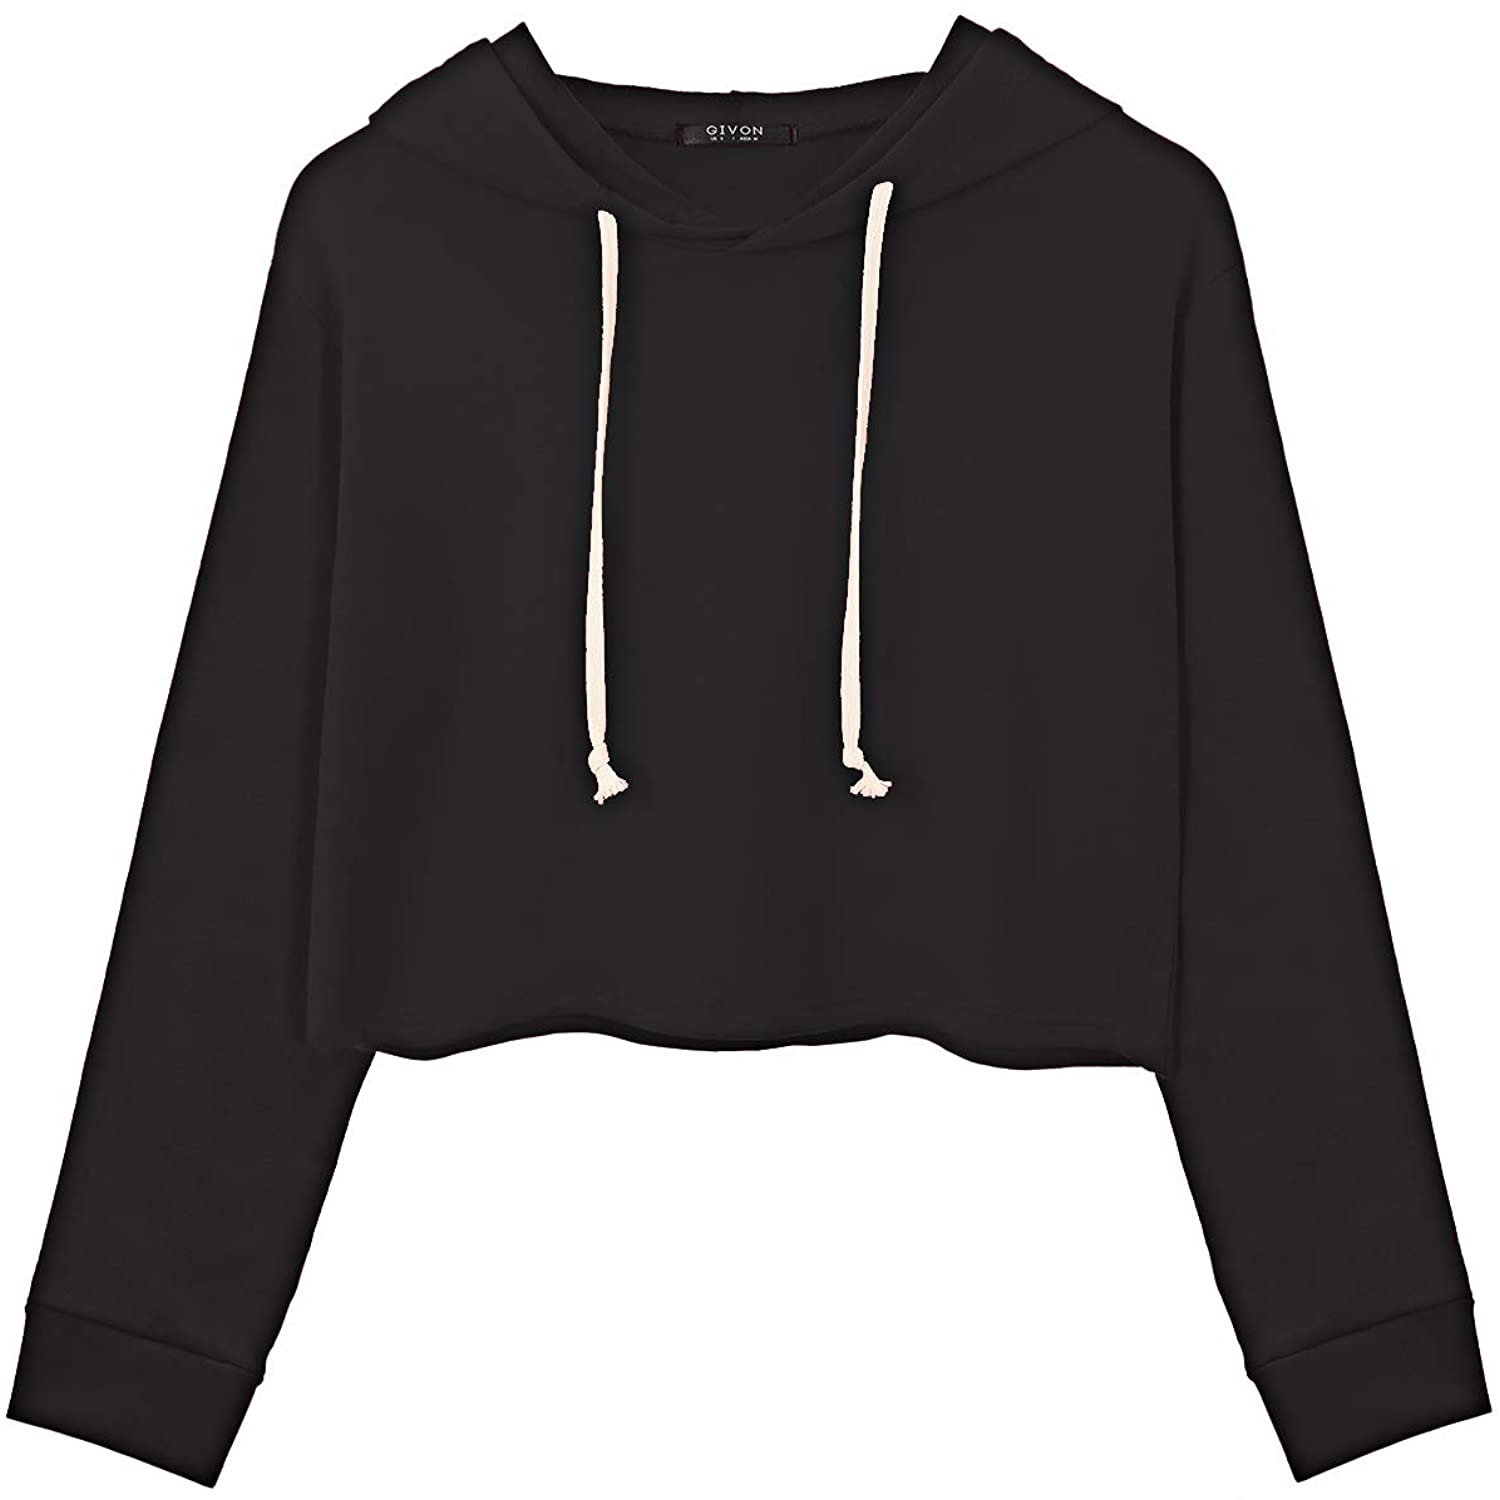 SweatyRocks Womens Warm Fleece Crop Top Solid Long Sleeve Hoodie Sweatshirt Pullover Shirt